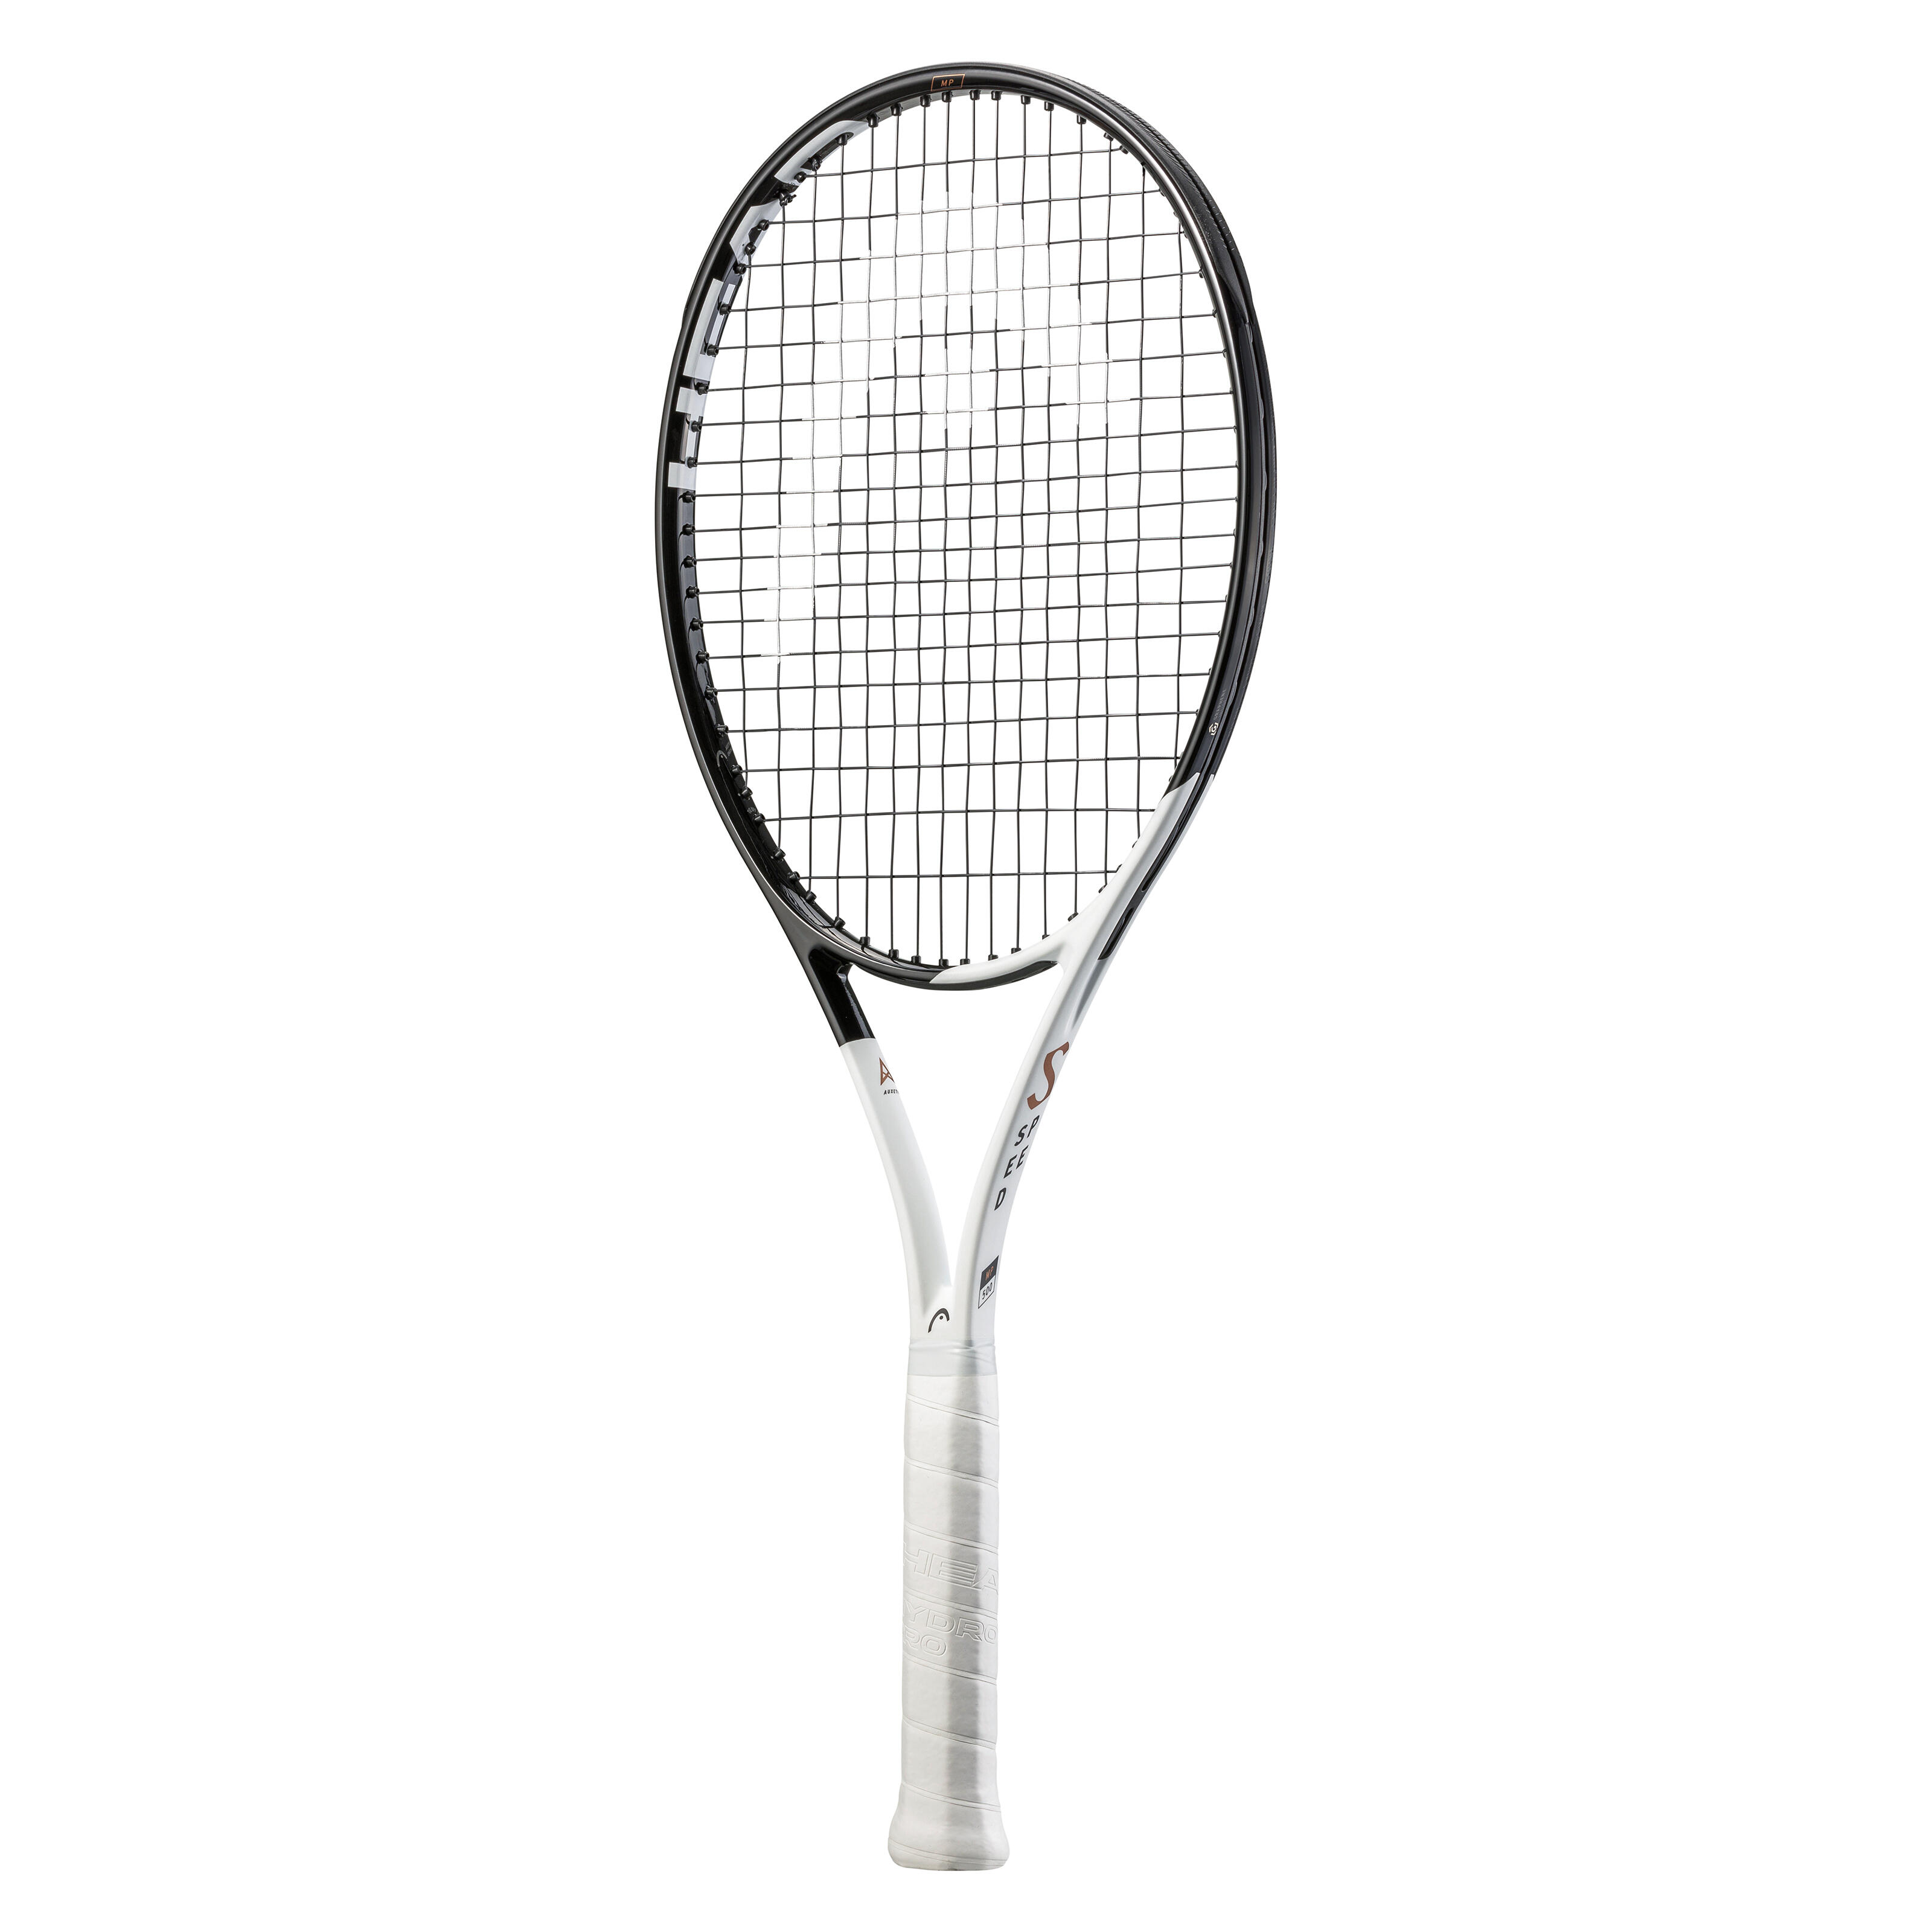 Rachetă Tenis Head Auxetic Speed MP 300g Negru-Alb Adulți 300g  Rachete de tenis